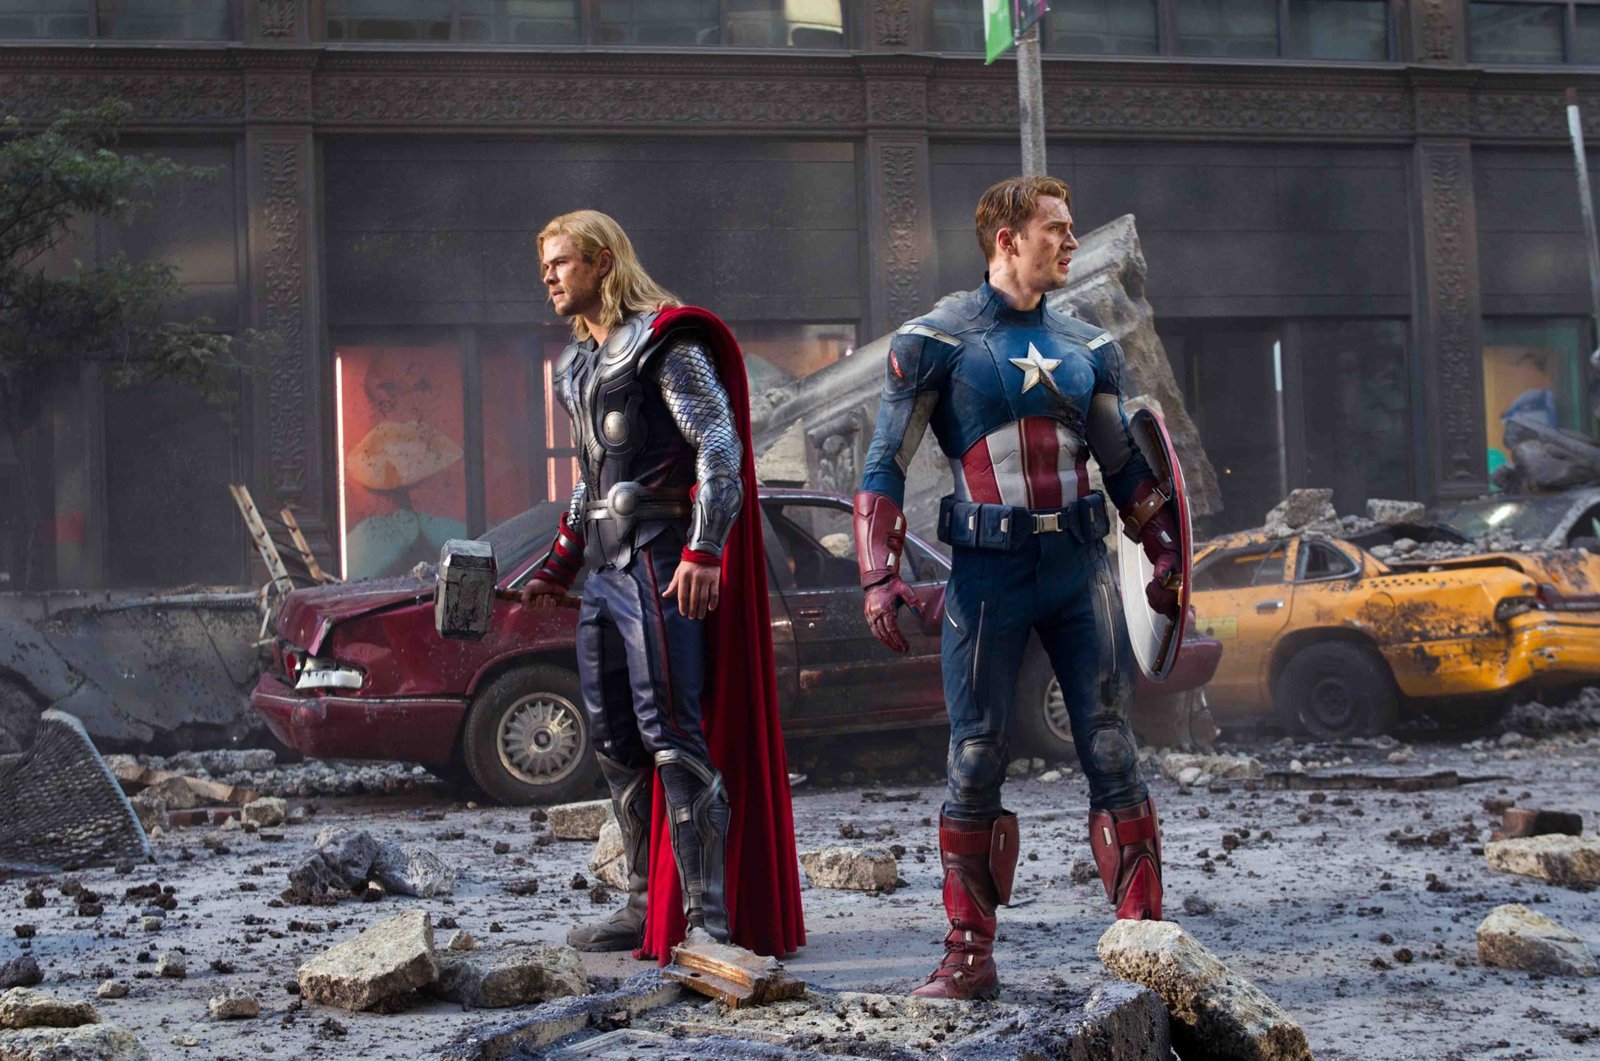 Chris Evans and Chris Hemsworth in The Avengers (2012)